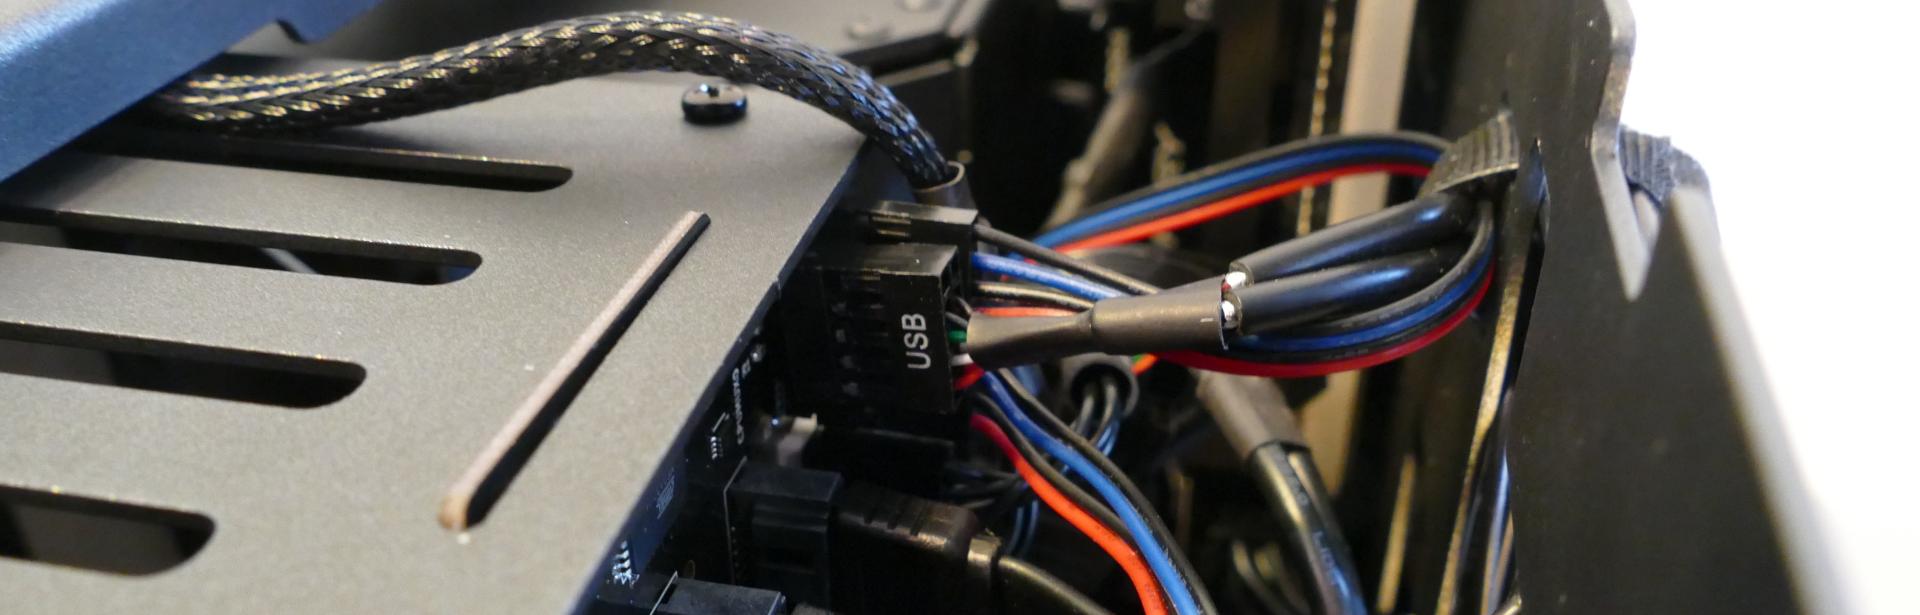 USB wiring on Thelio-IO board